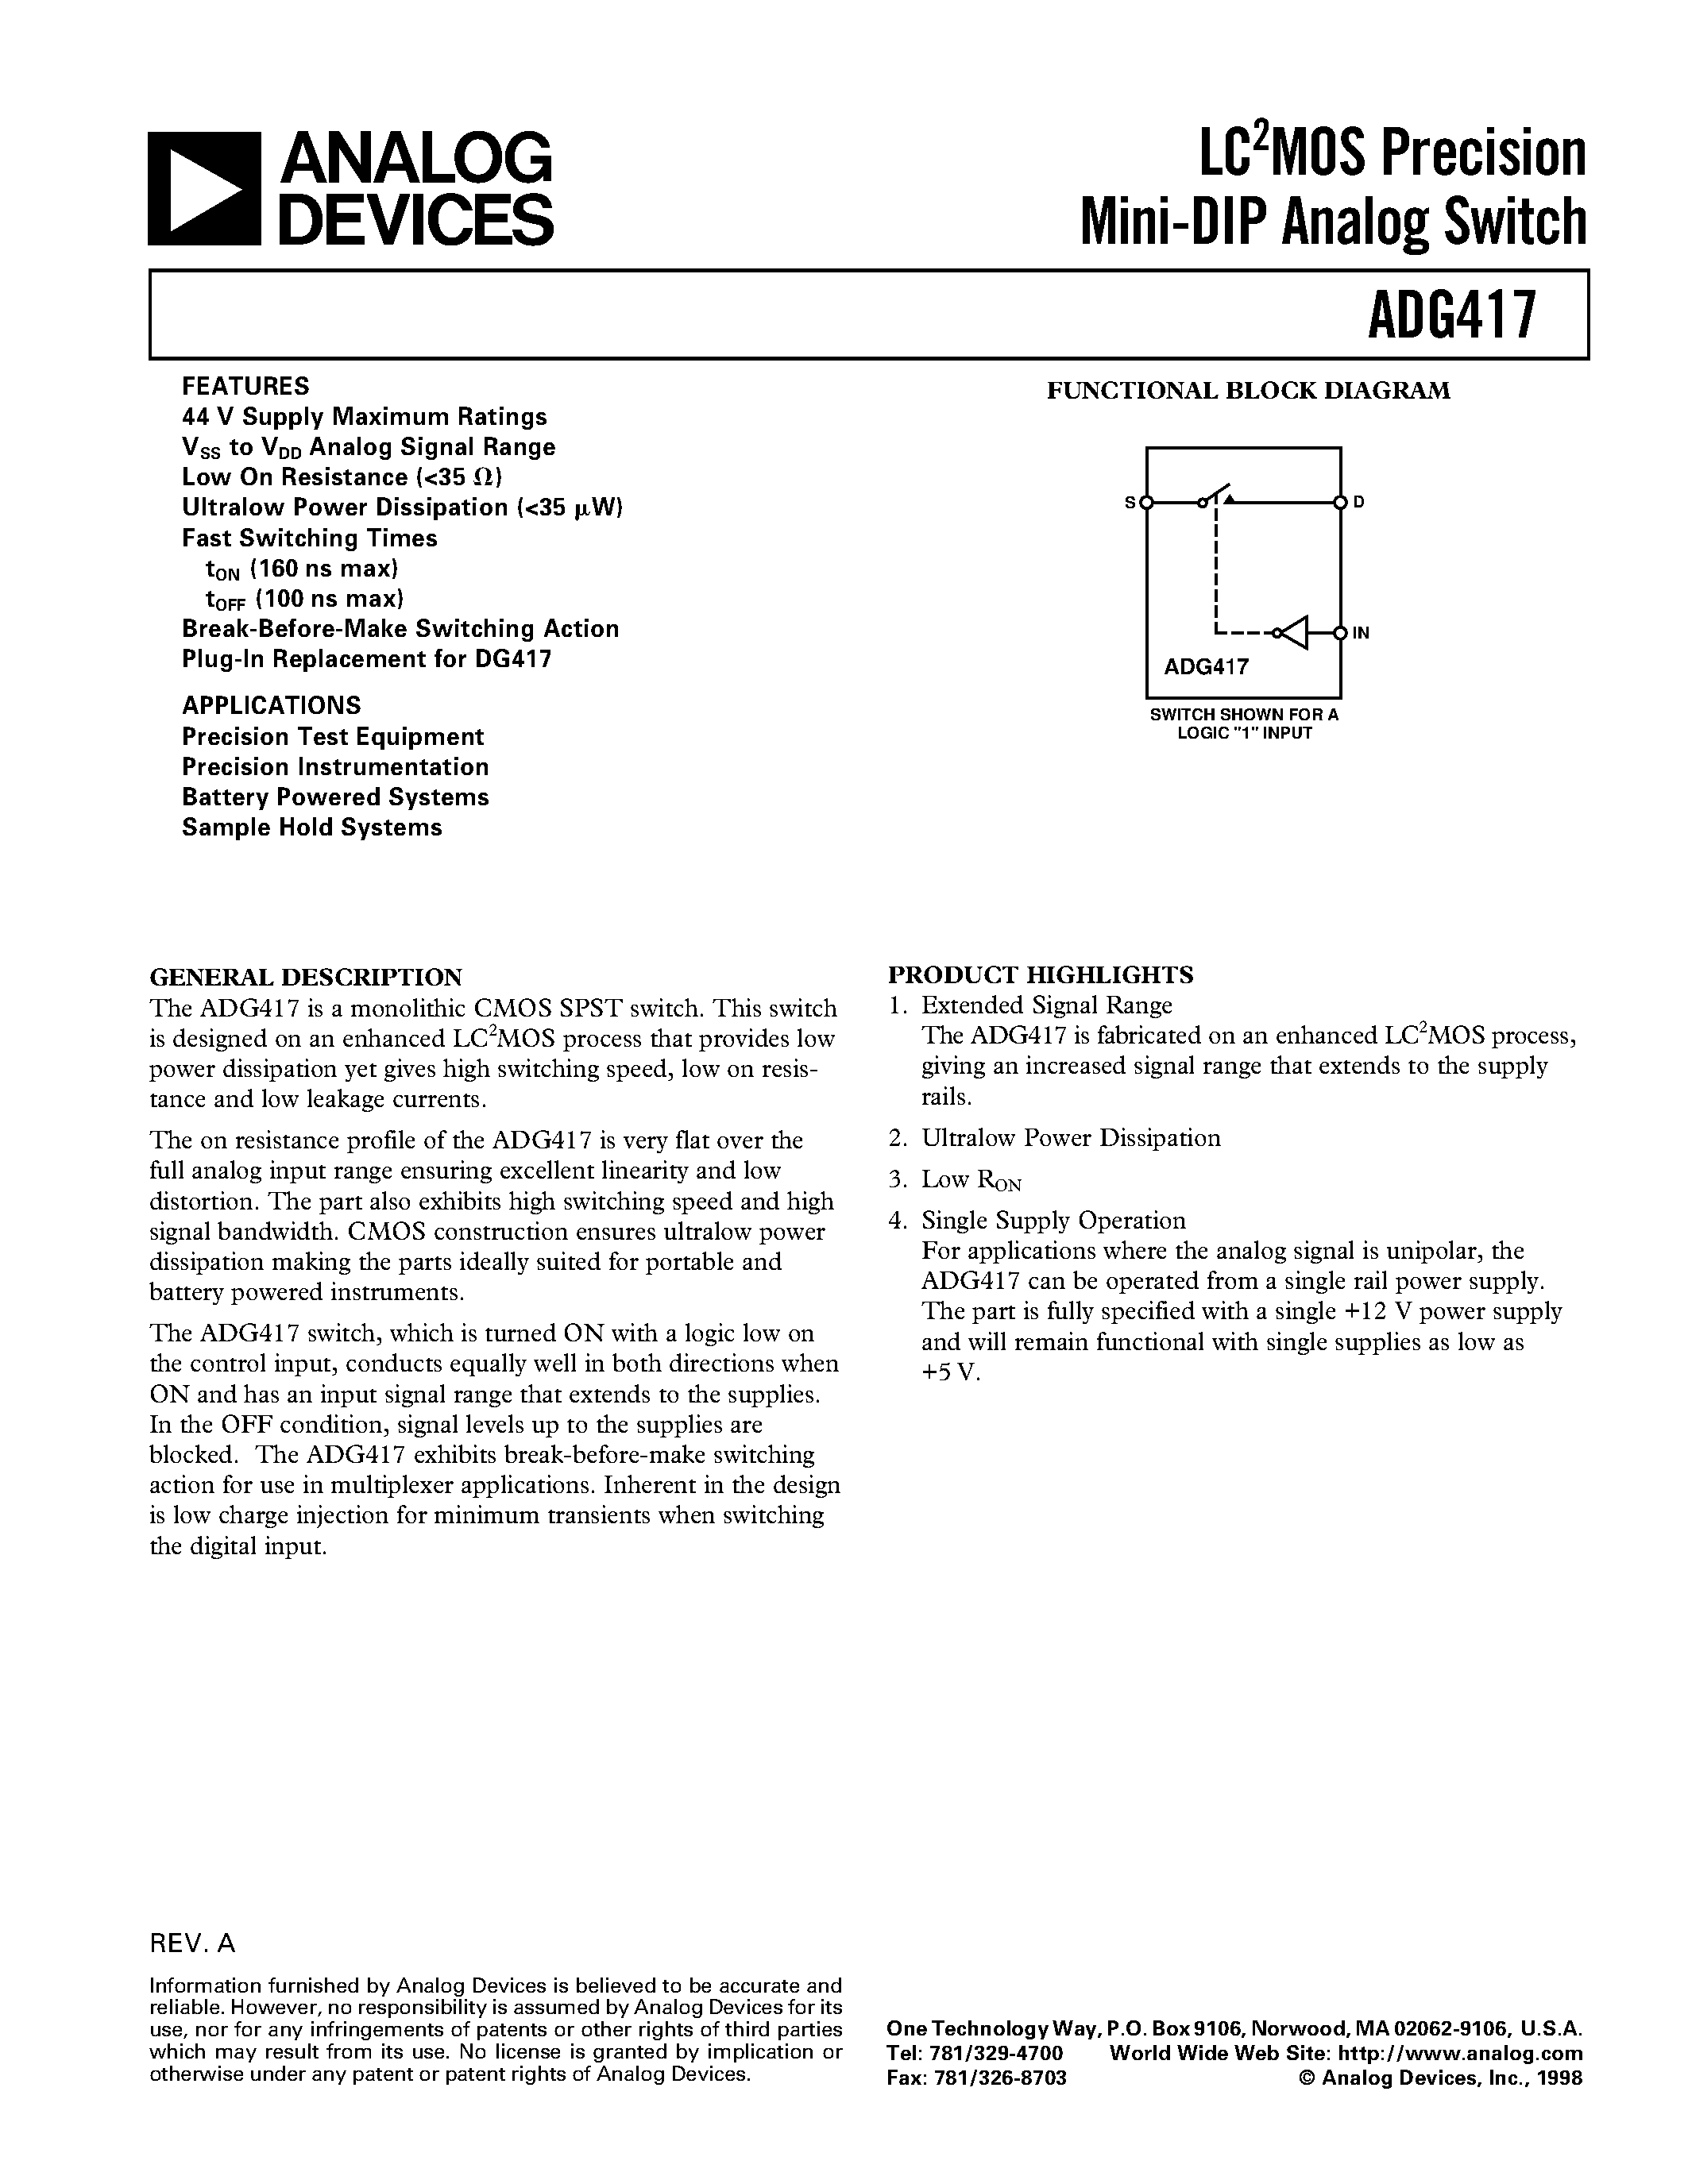 Datasheet DG419 - LC2MOS Precision Mini-DIP Analog Switch page 1